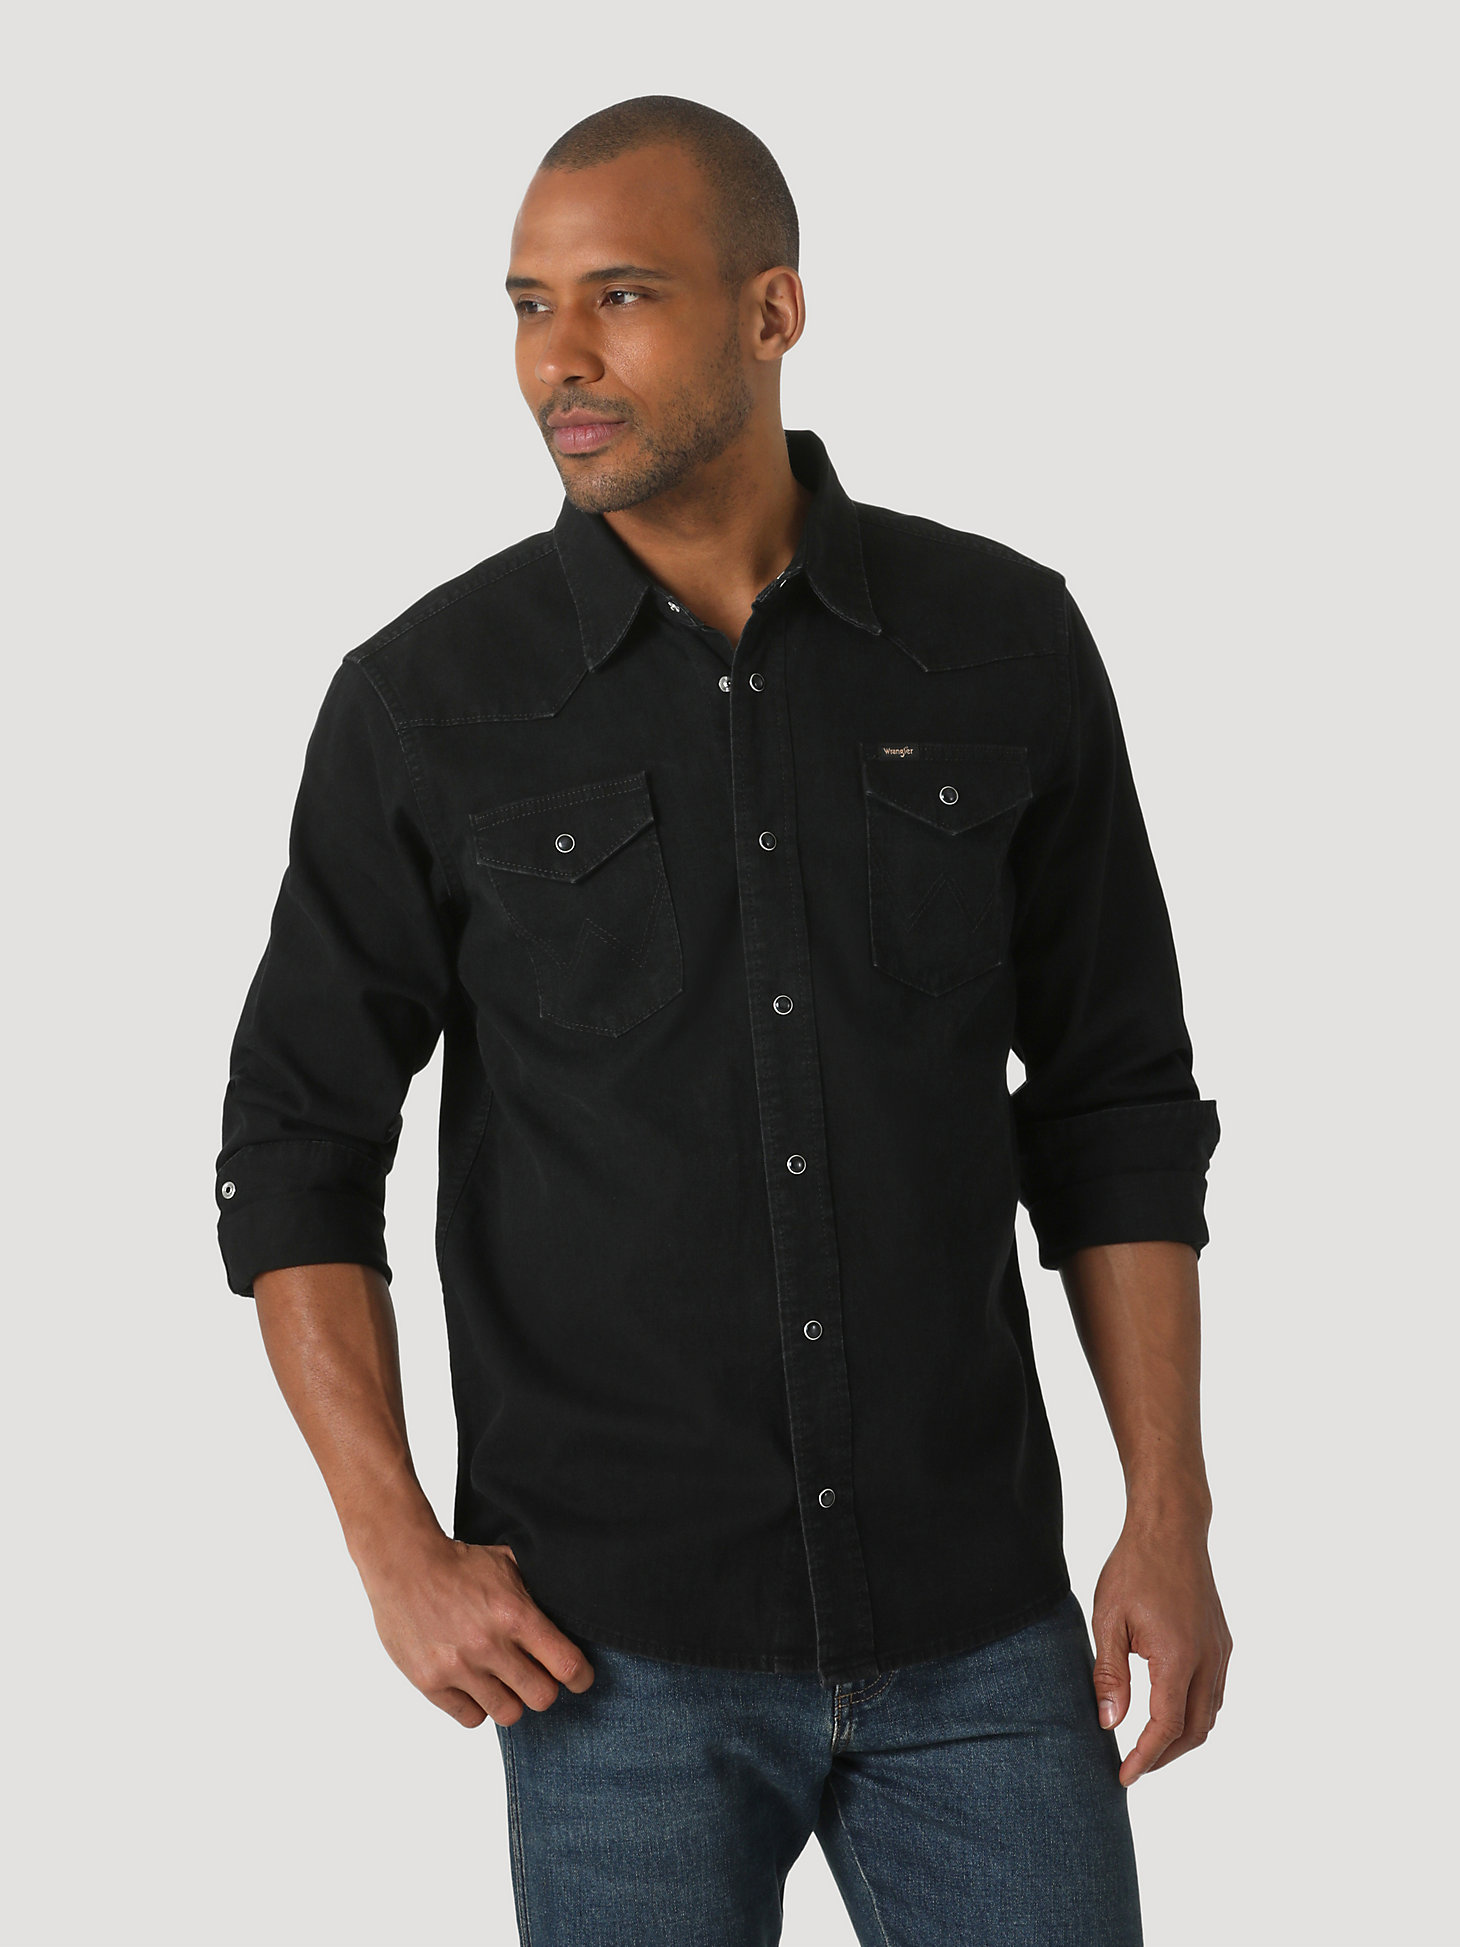 Men's Denim Western Snap Front Shirt in Black Denim alternative view 1